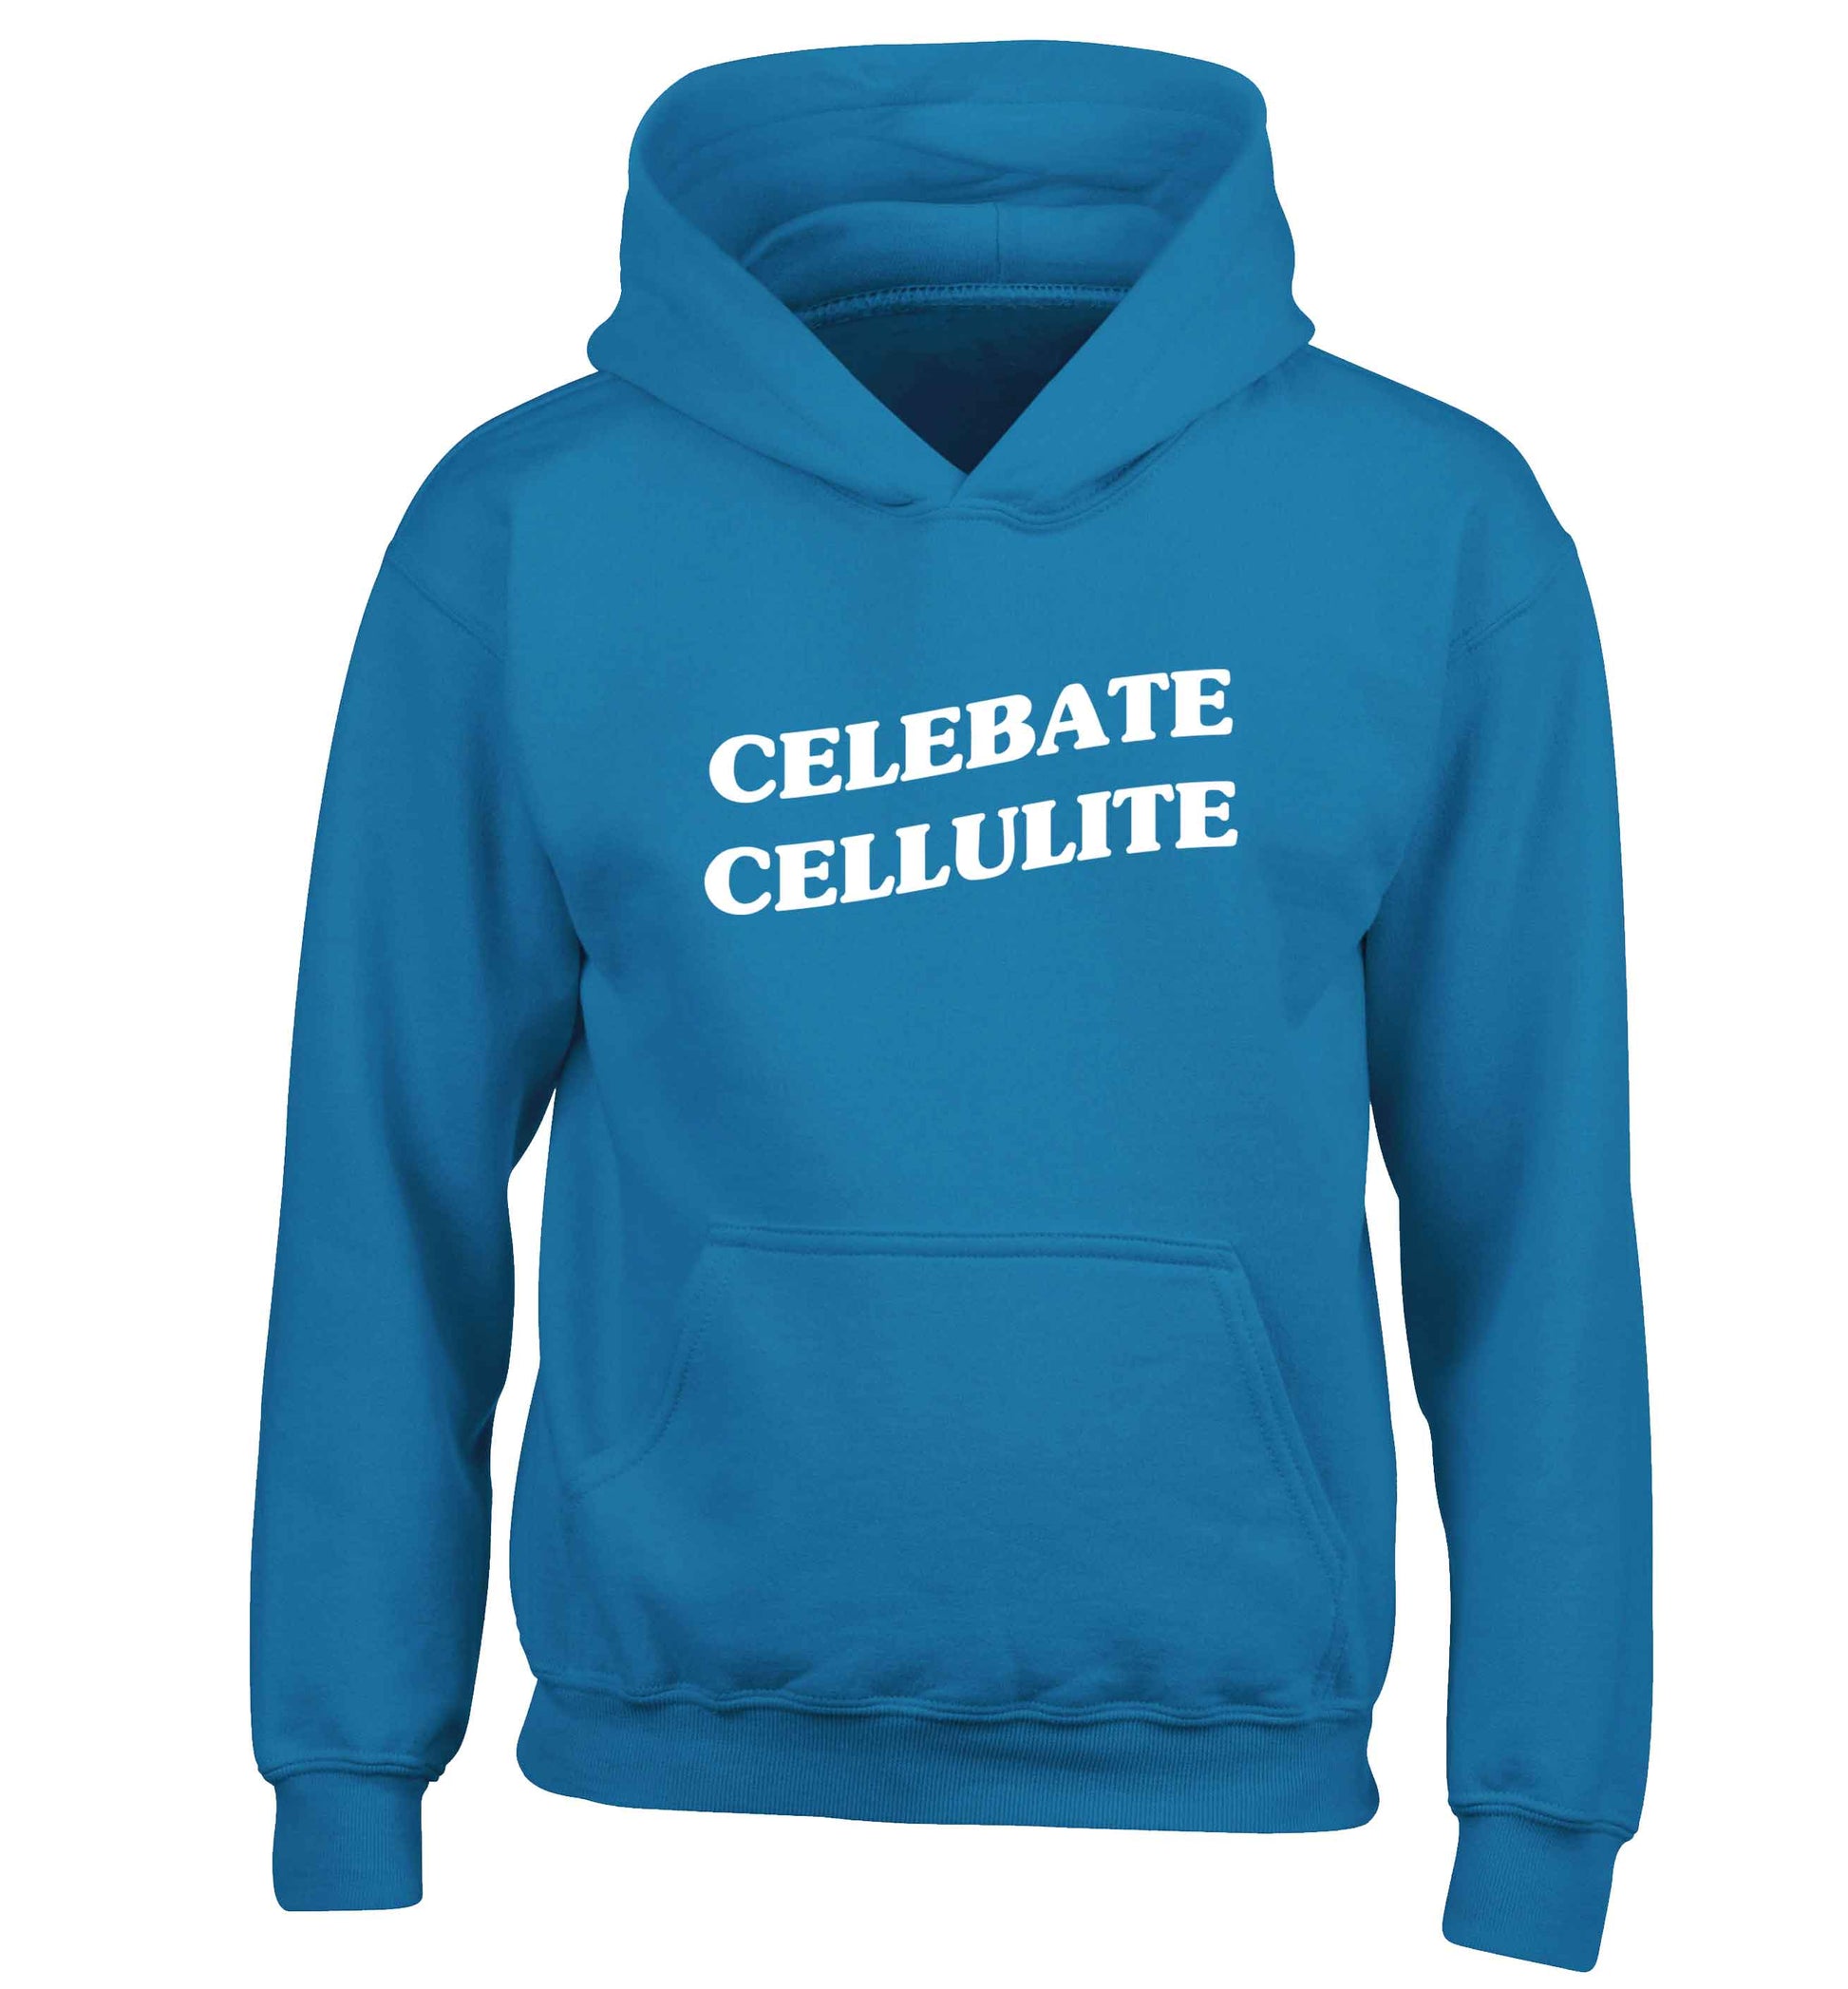 Celebrate cellulite children's blue hoodie 12-13 Years